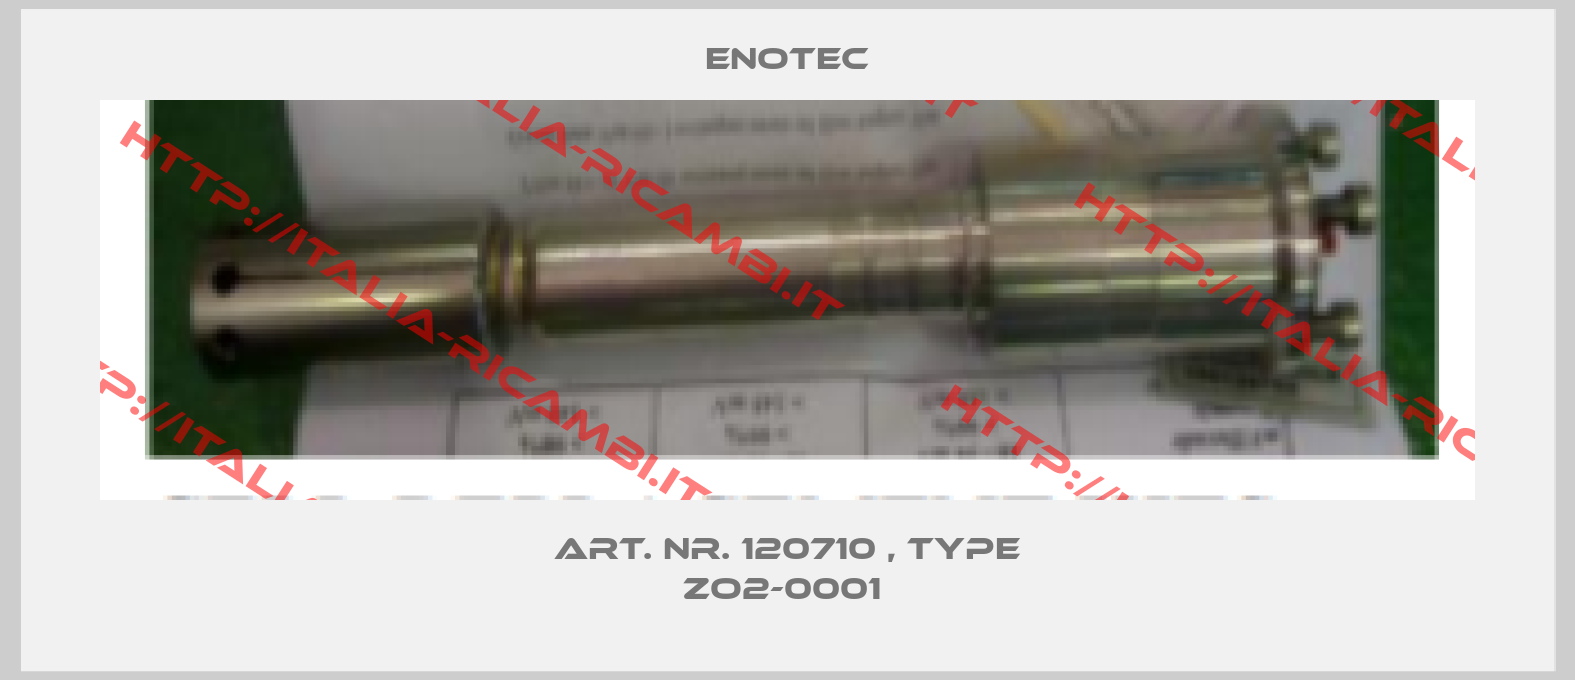 Enotec-Art. Nr. 120710 , type ZO2-0001 